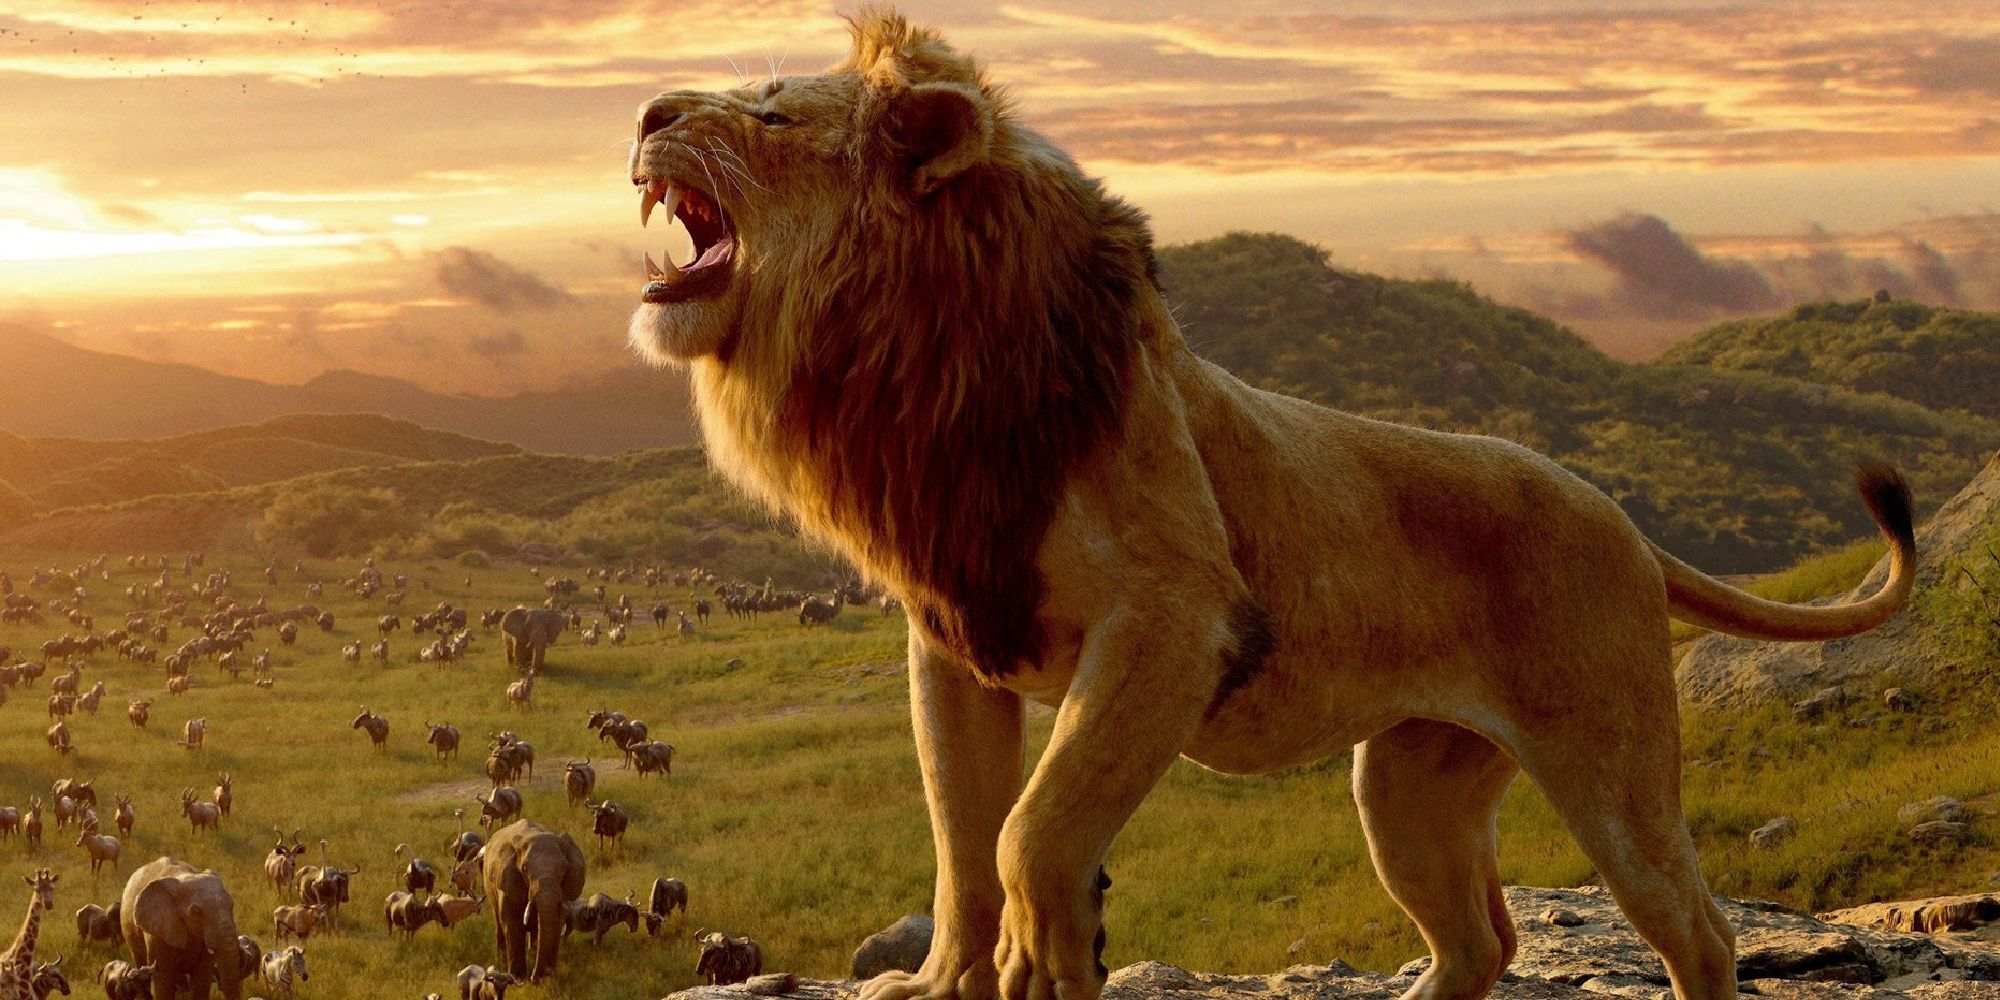 A shot of Mufasa rawring in The Lion King.